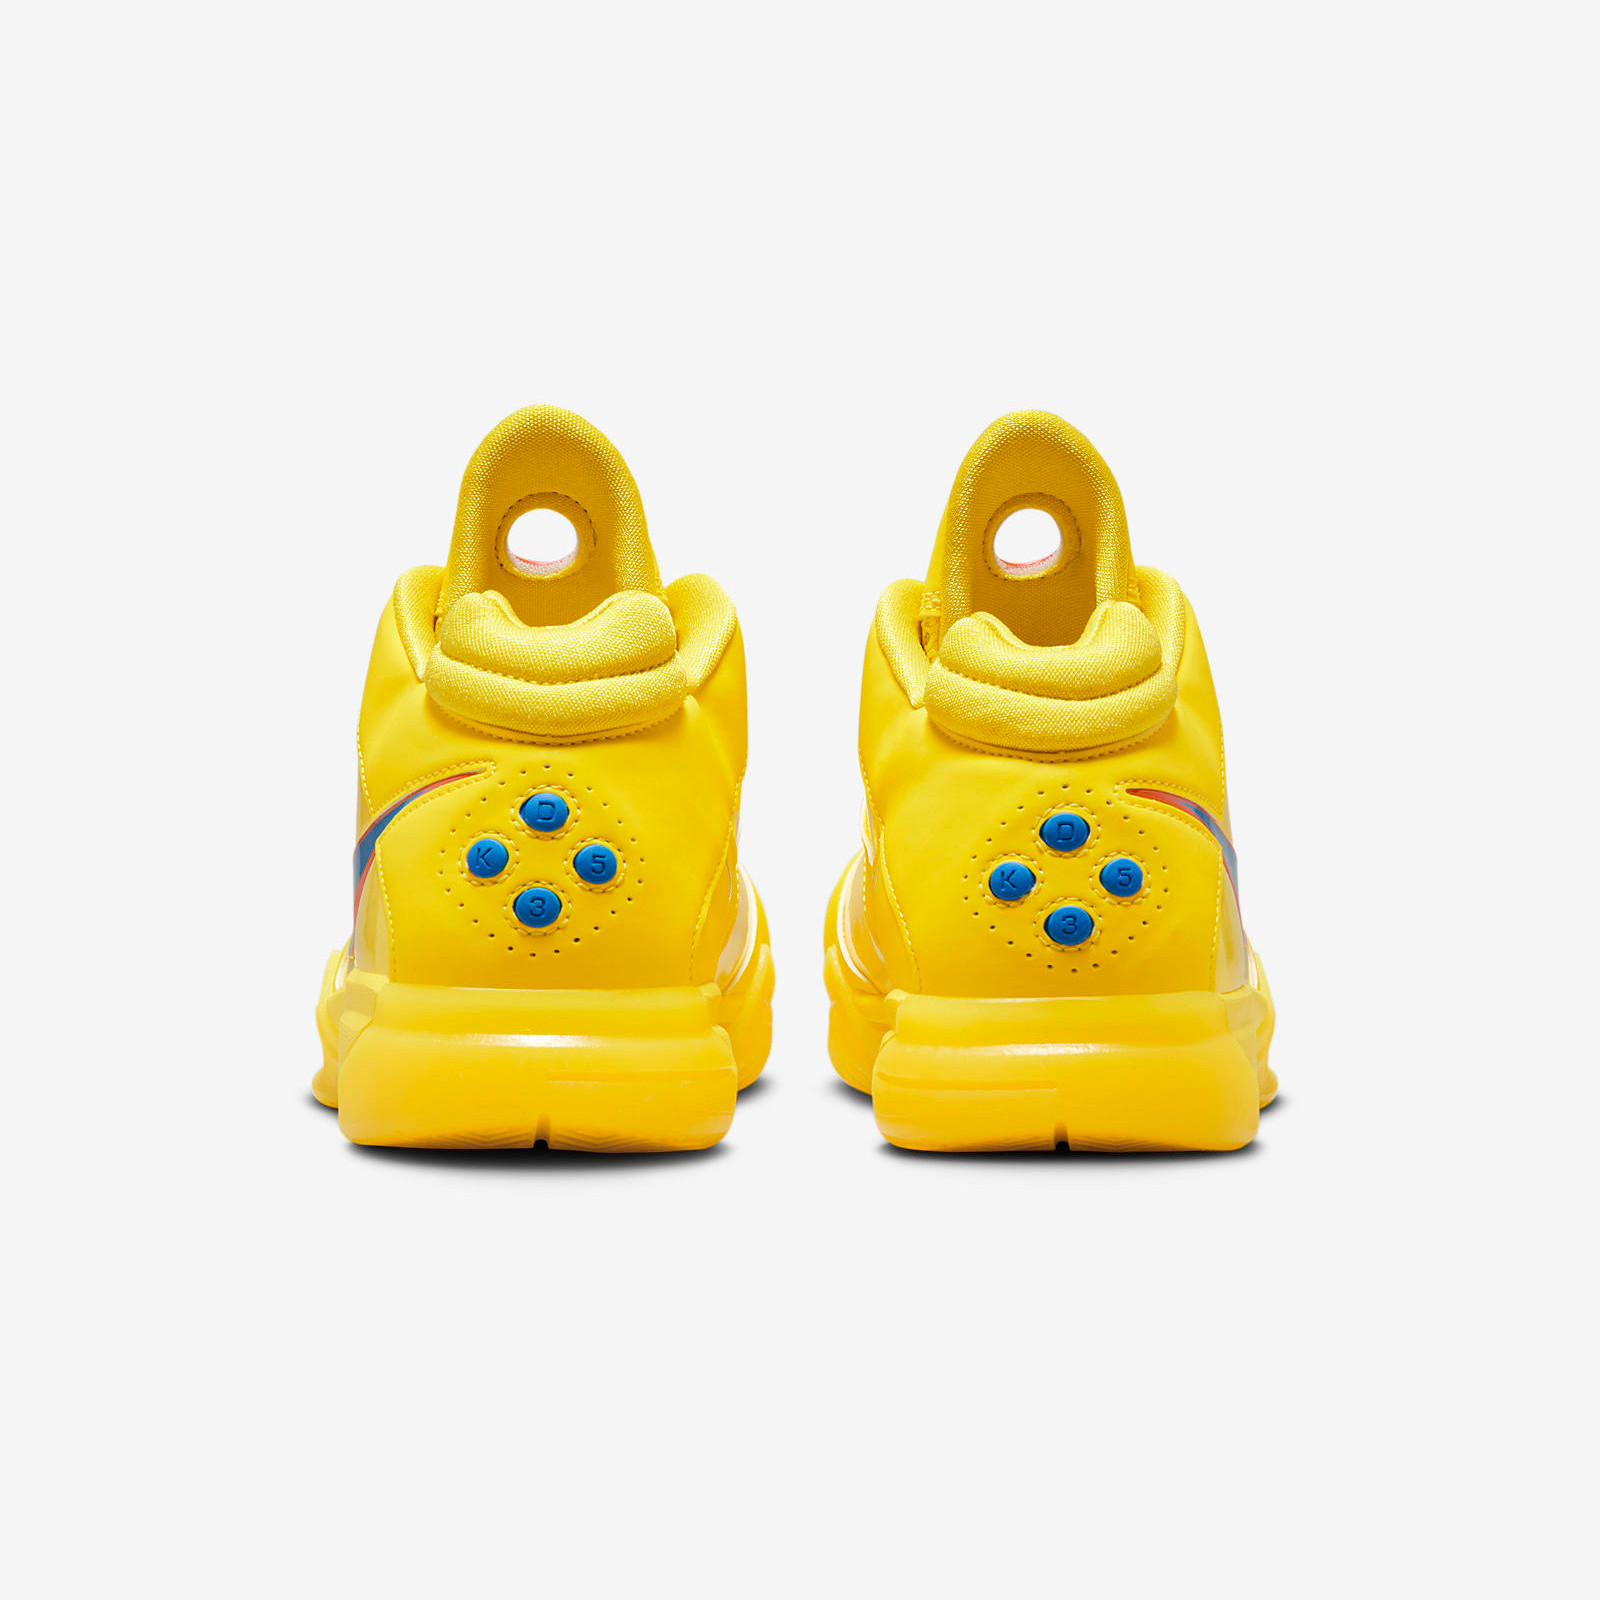 Nike Zoom KD3
« Vibrant Yellow »